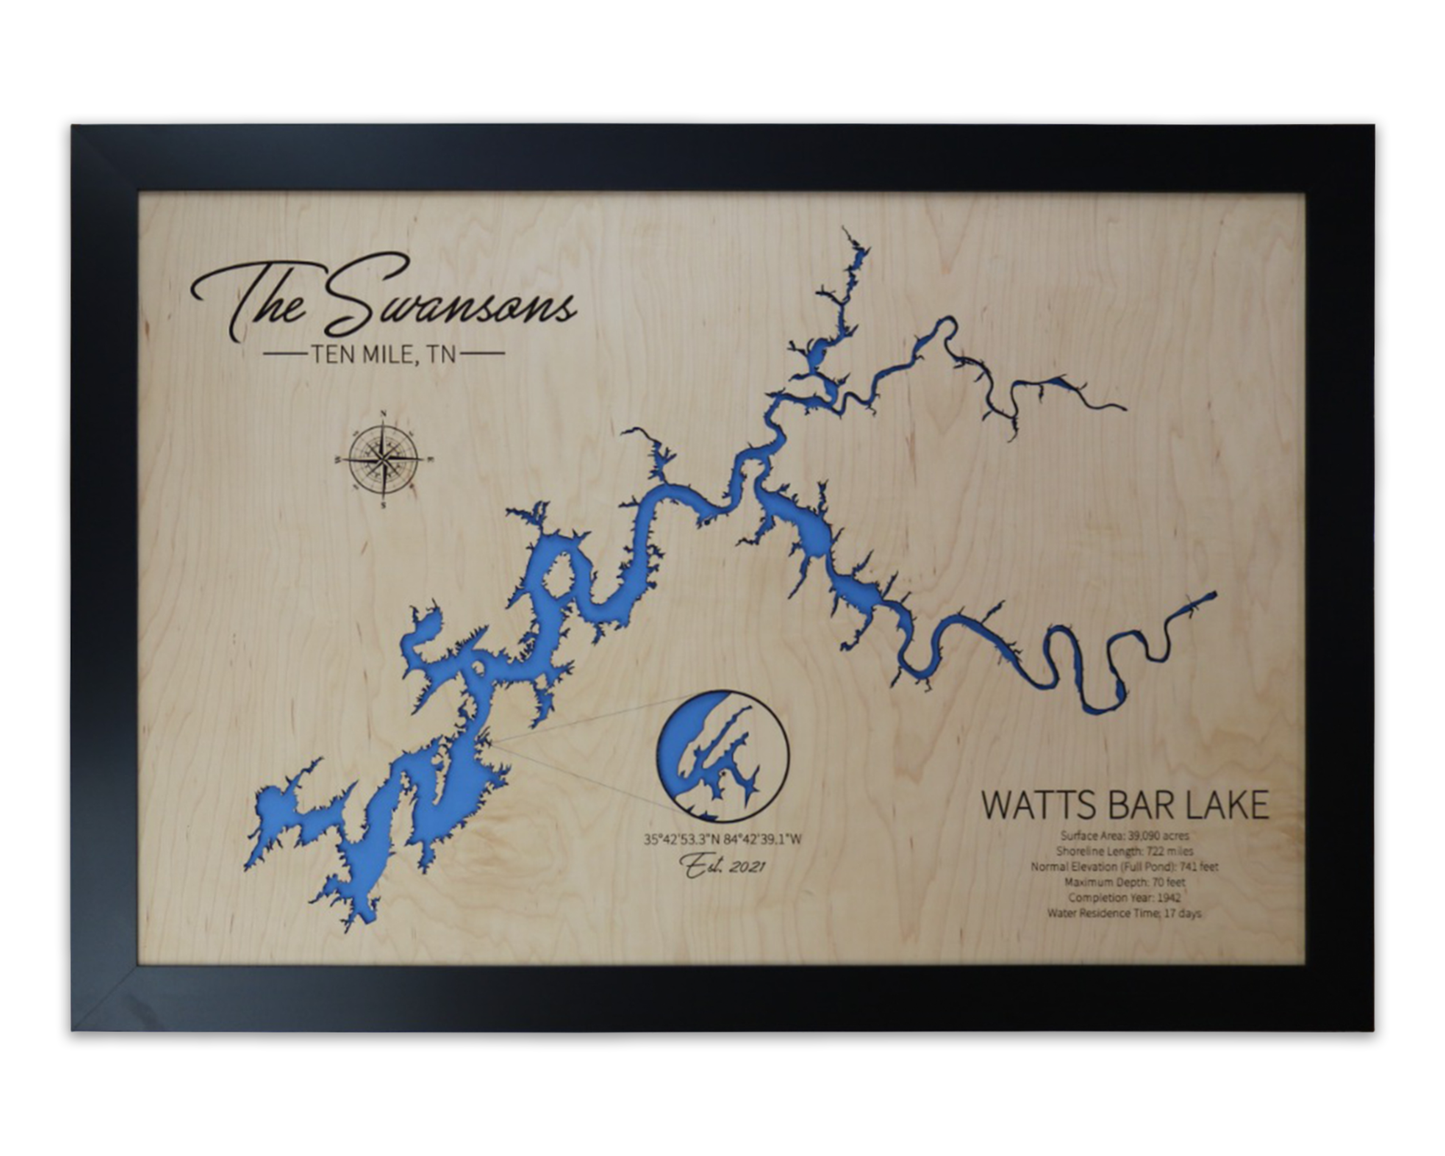 Watts Bar Lake, Tennessee - Notting Hill Designs - Custom Wood Maps